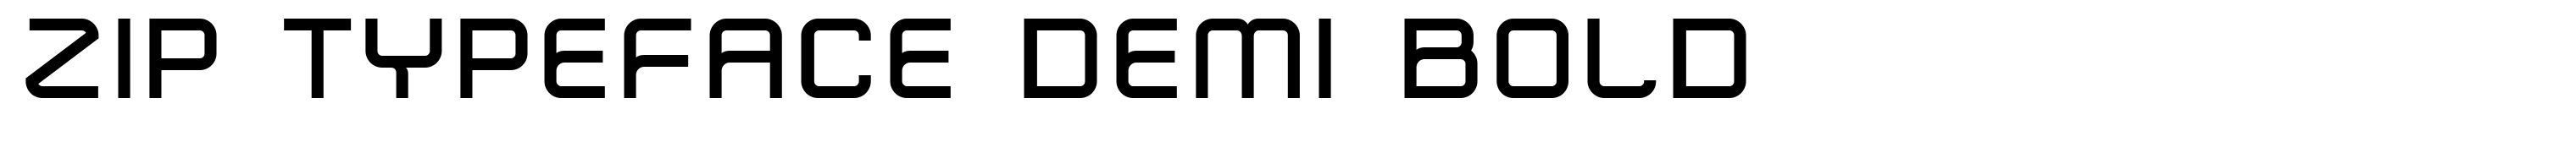 Zip Typeface Demi Bold